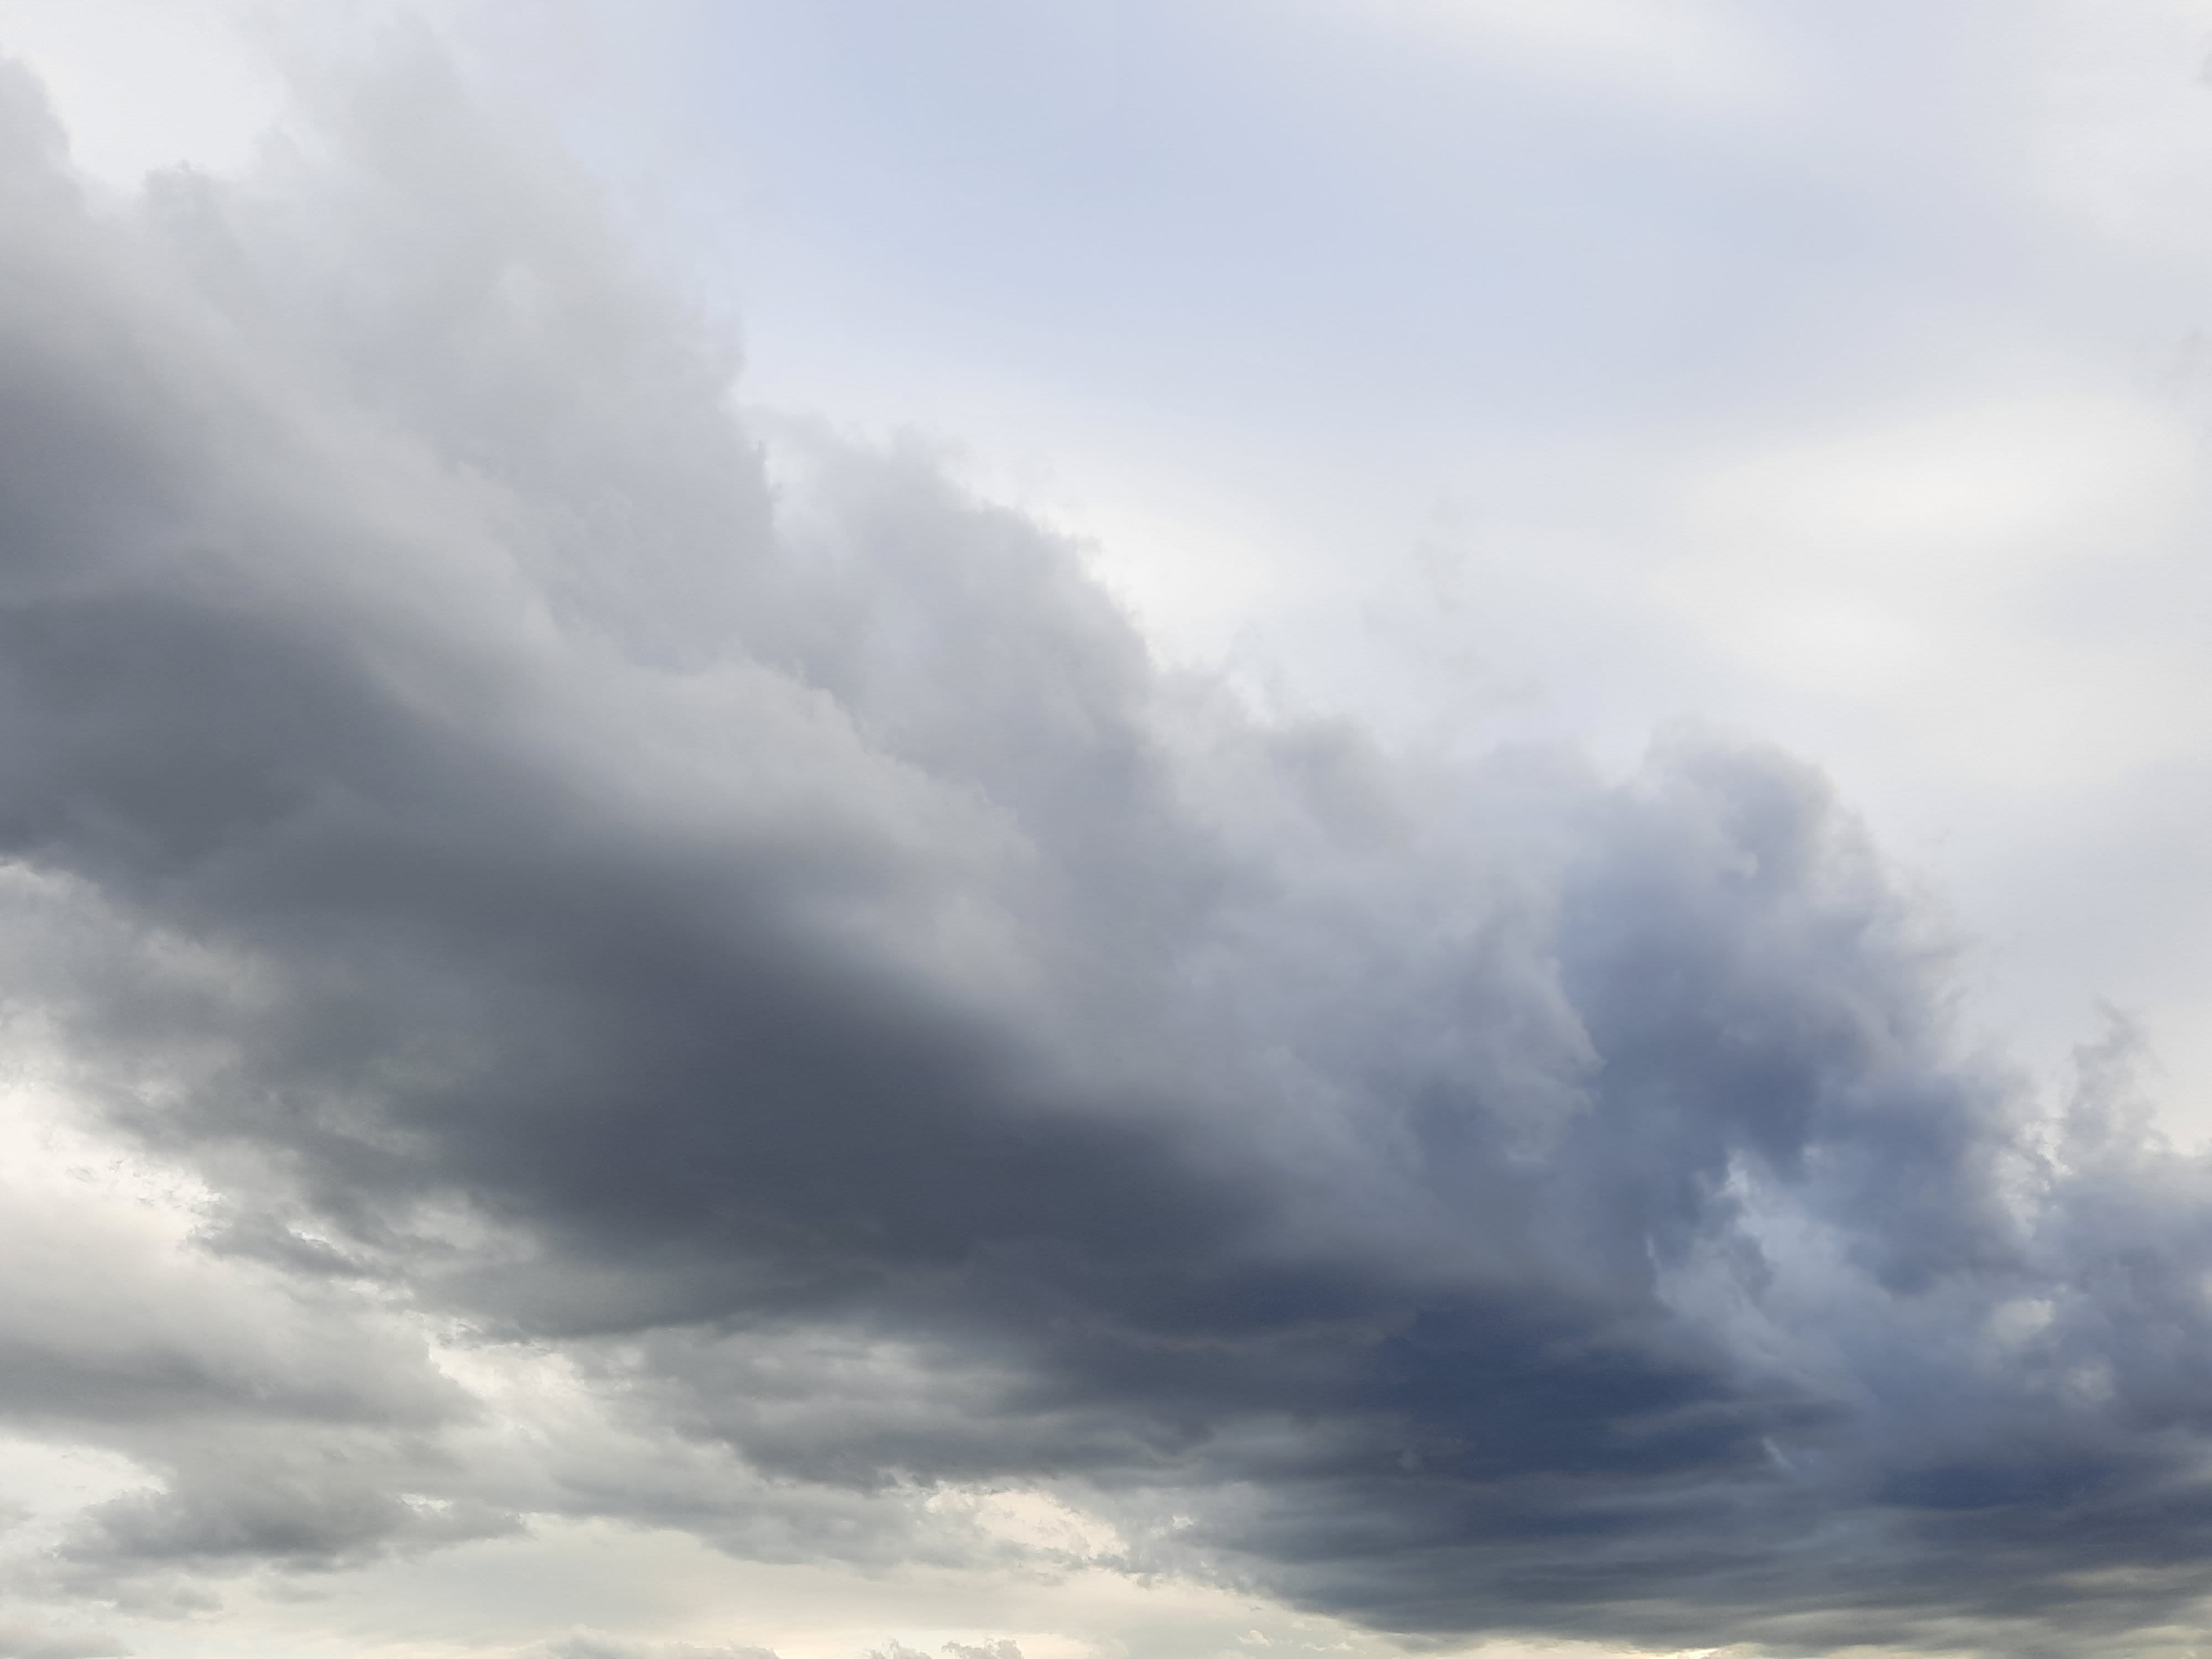 Ciel orageux au dessus de Valence ce samedi soir - 22/05/2021 19:00 - Kilian SPUNTON